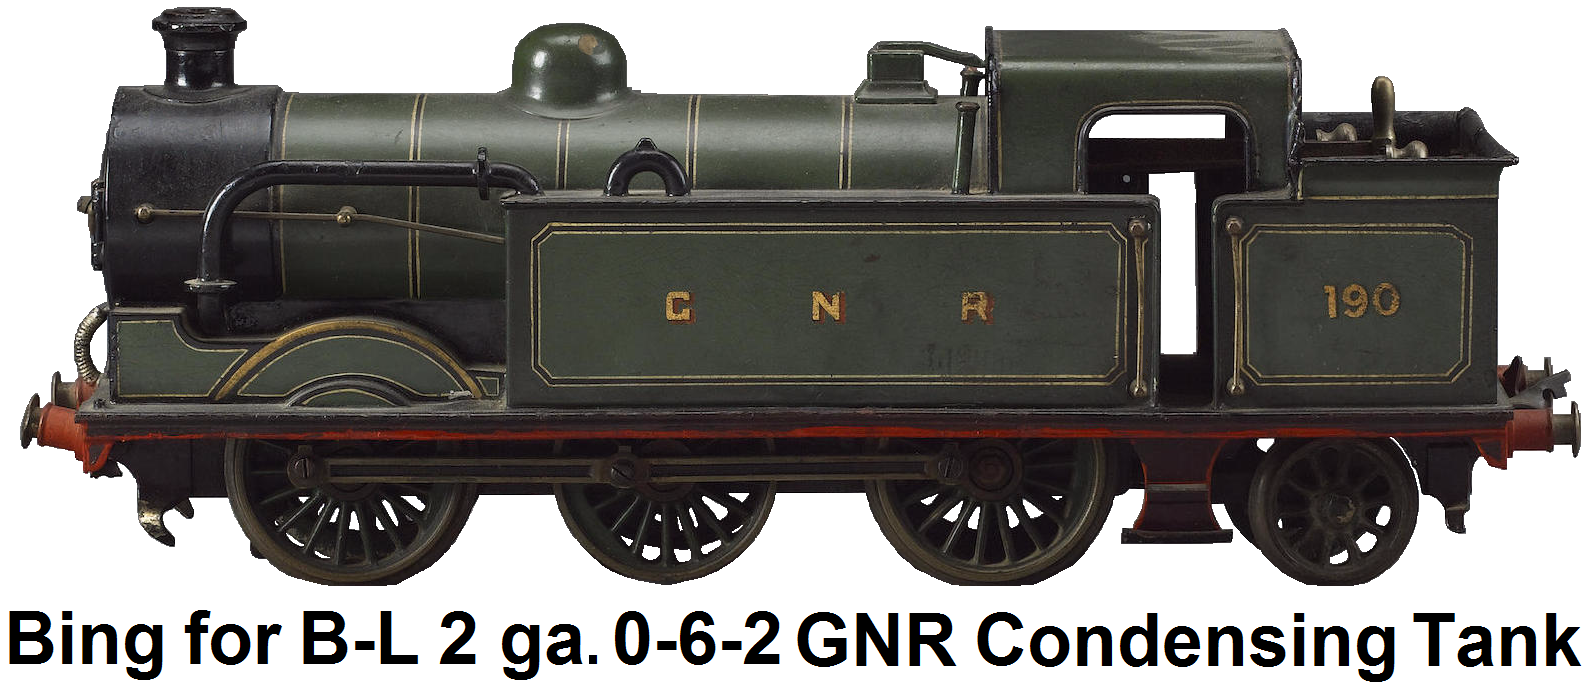 Bing for Bassett-Lowke Gauge 2 GNR 0-6-2 Condensing Tank Locomotive #190